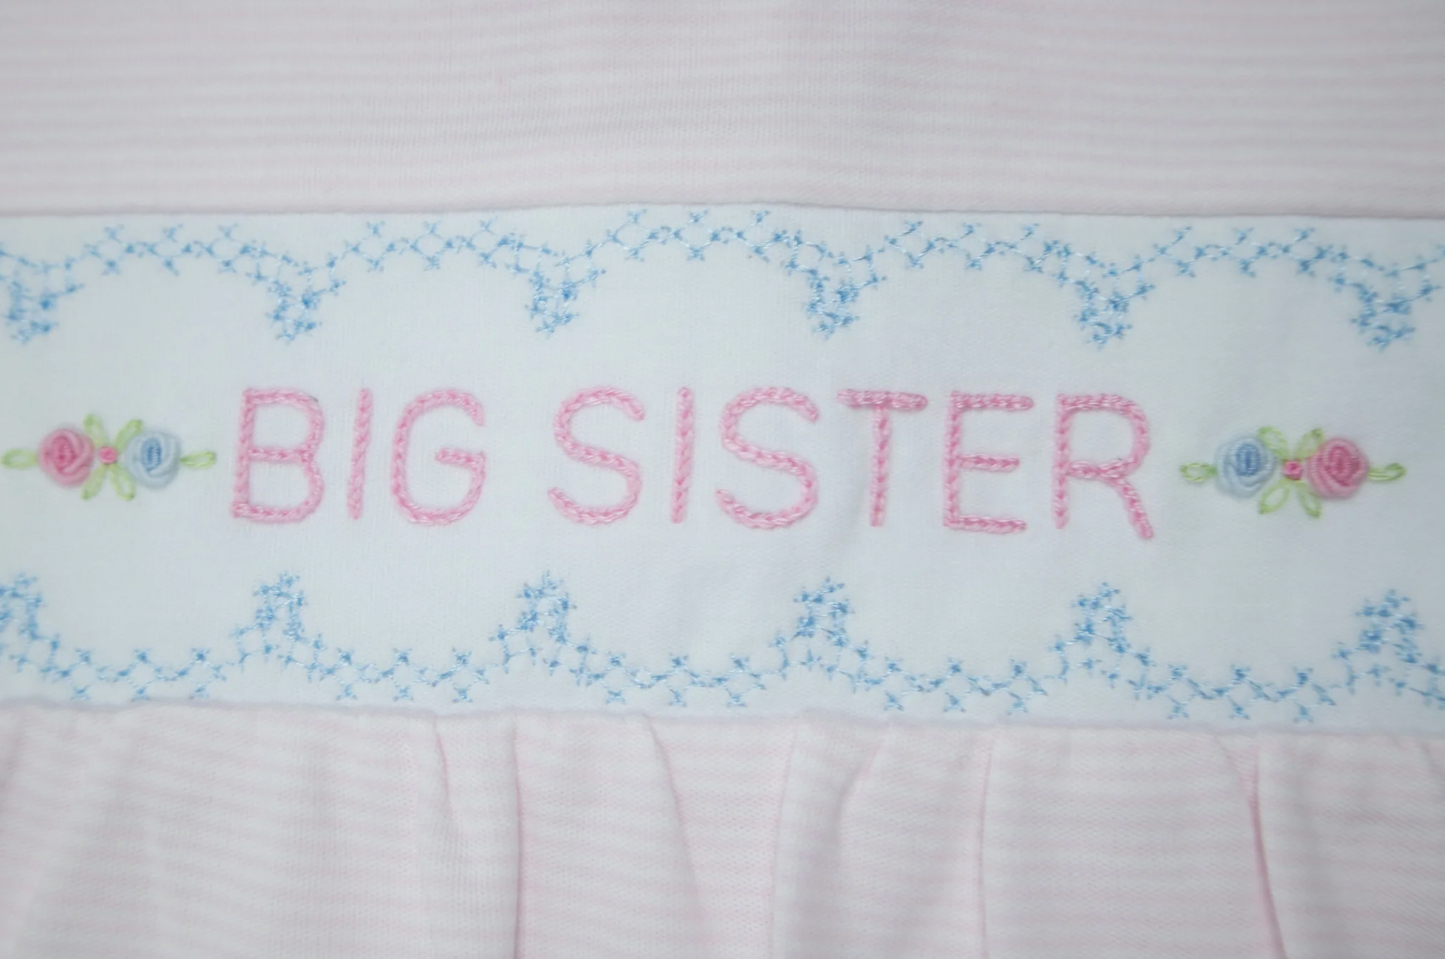 'Big Sister' Dress w/ bloomers - Magpies Paducah